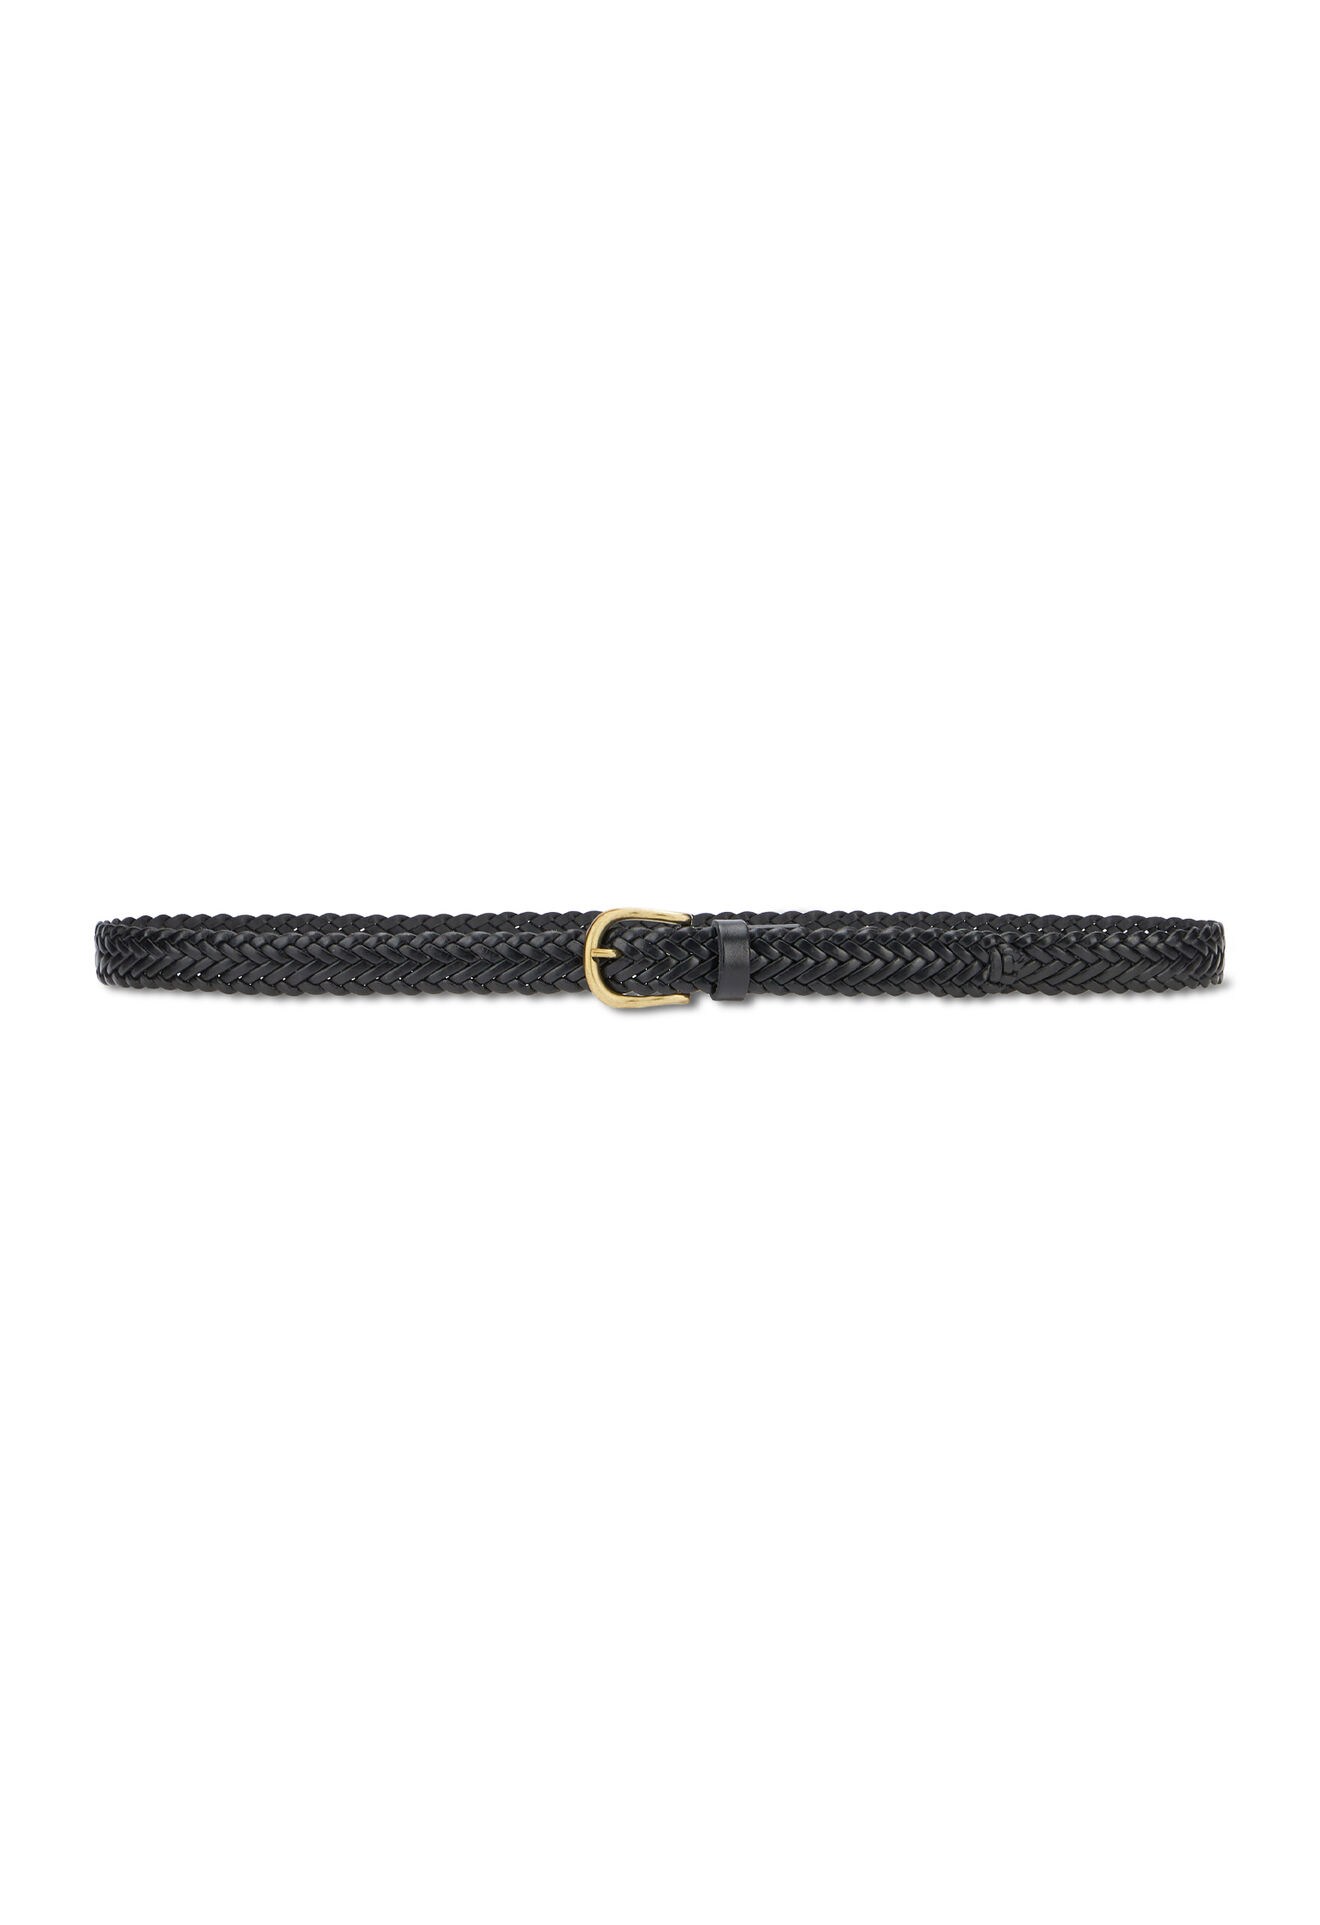 Braided belt in Black: Luxury Italian Accessories